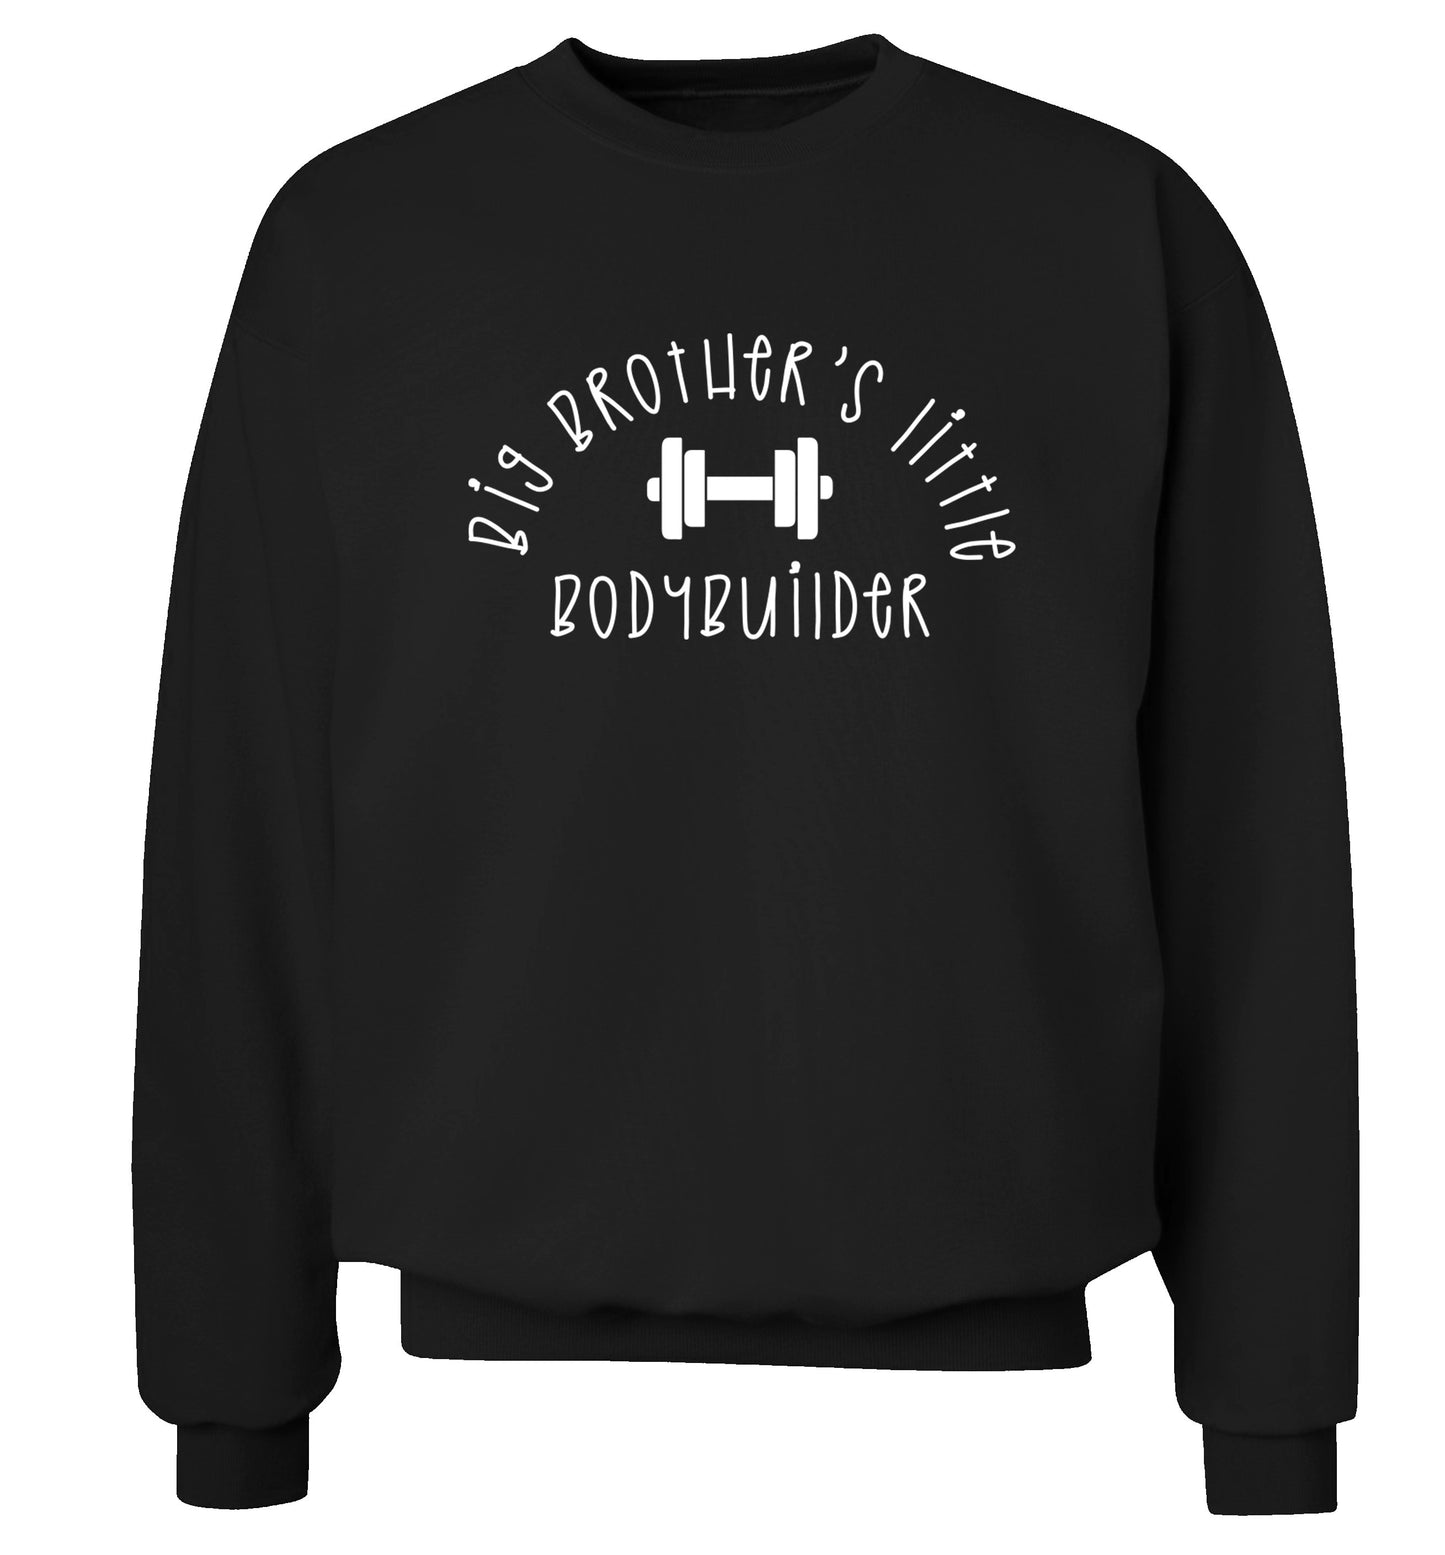 Big brother's little bodybuilder Adult's unisex black Sweater 2XL